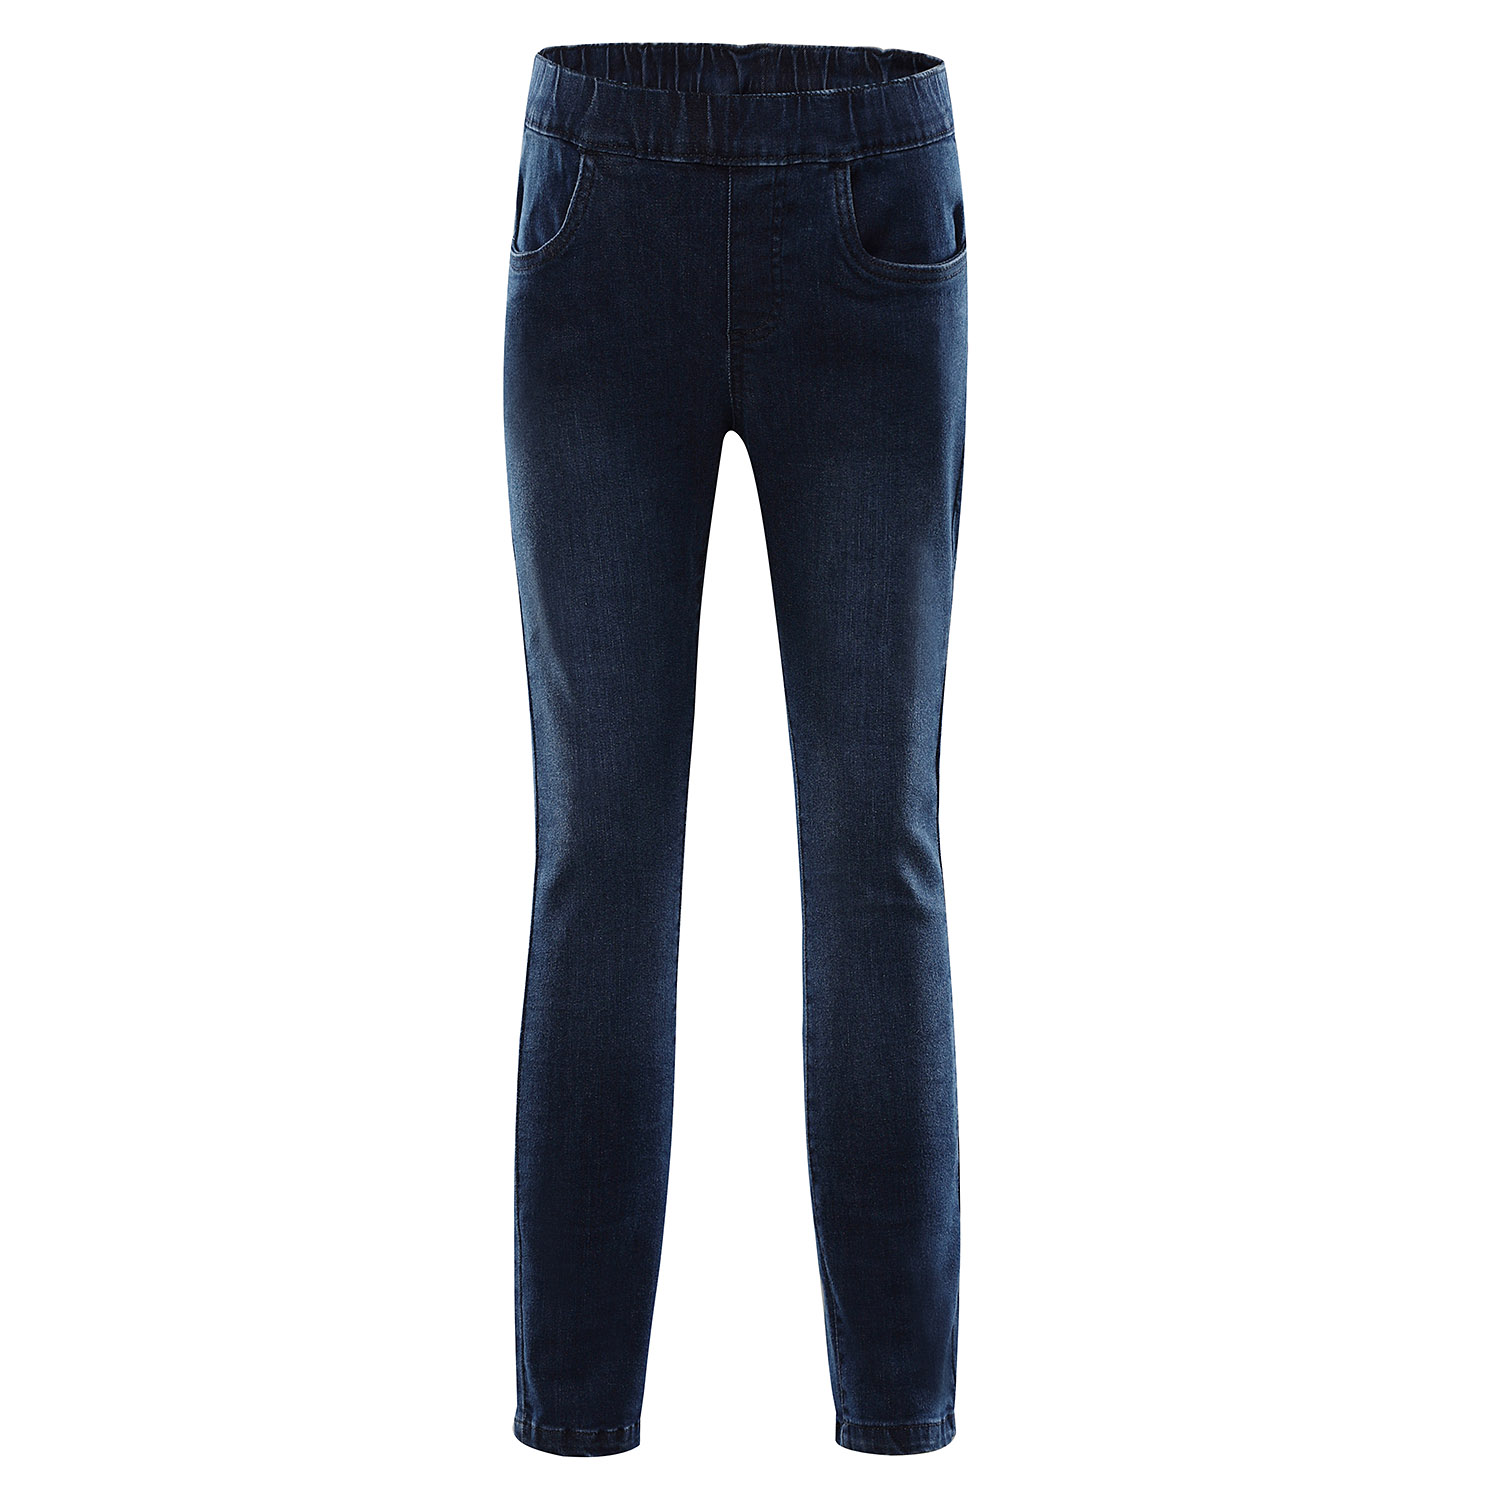 Kids jeans ALPINE PRO ALFO mood indigo variant pb